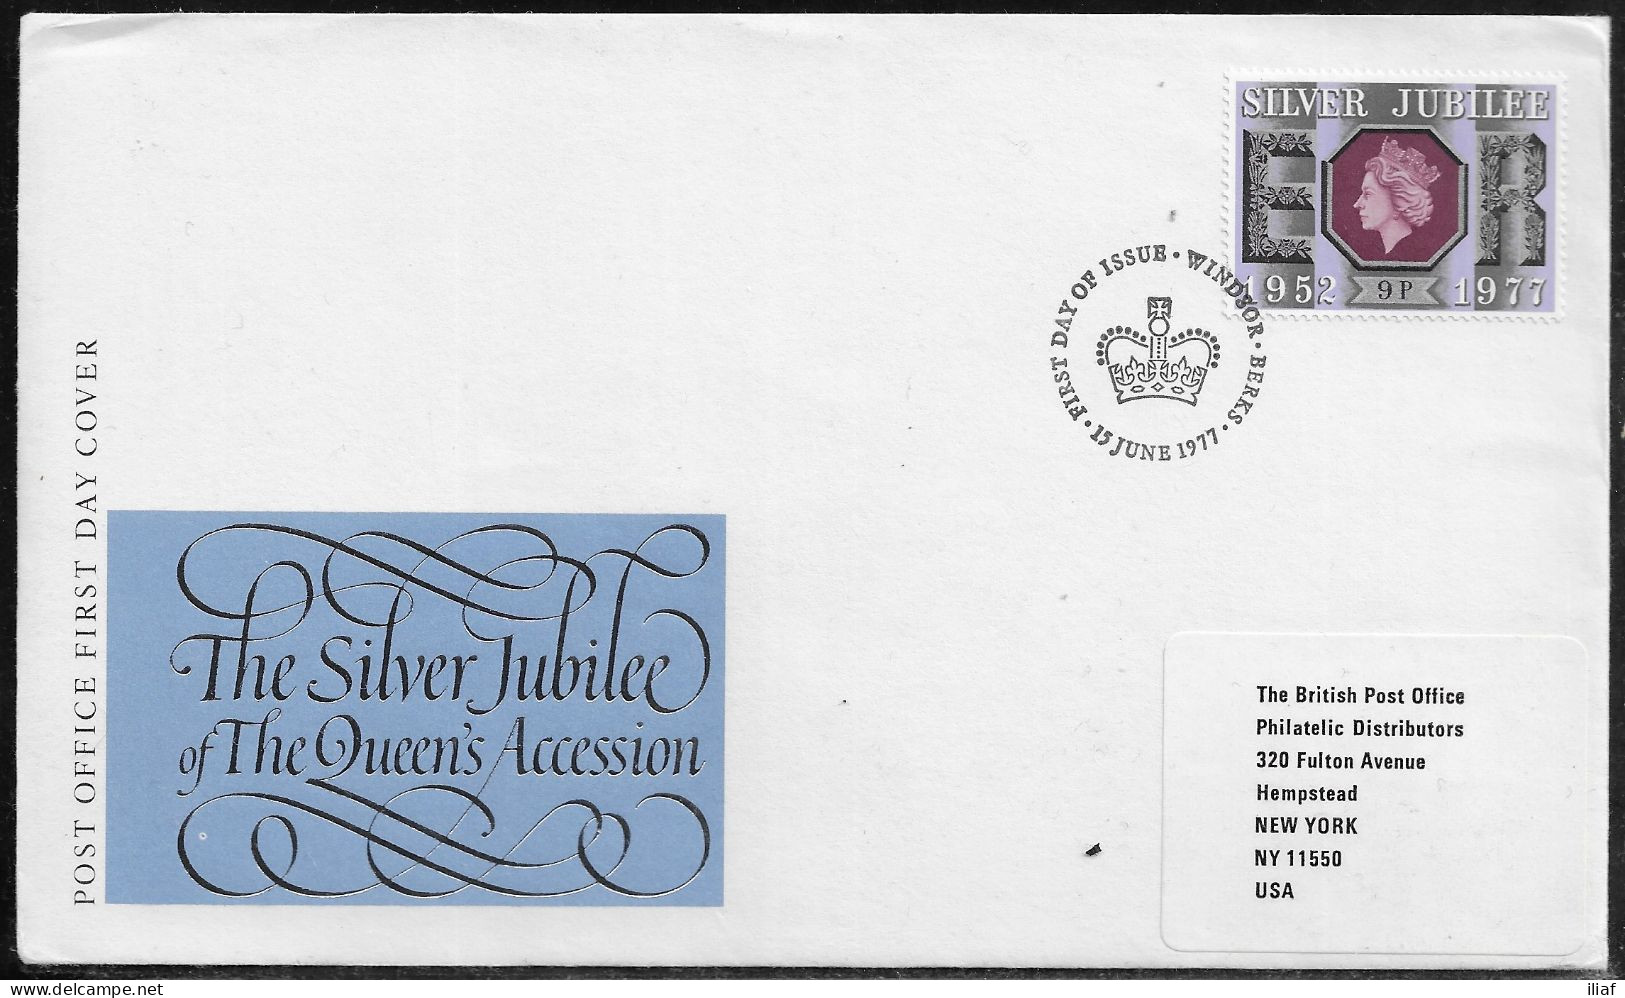 United Kingdom Of Great Britain.  FDC Sc. 811.  Silver Jubilee Of Queen Elizabeth II.  FDC Cancellation On FDC Envelope - 1971-1980 Dezimalausgaben